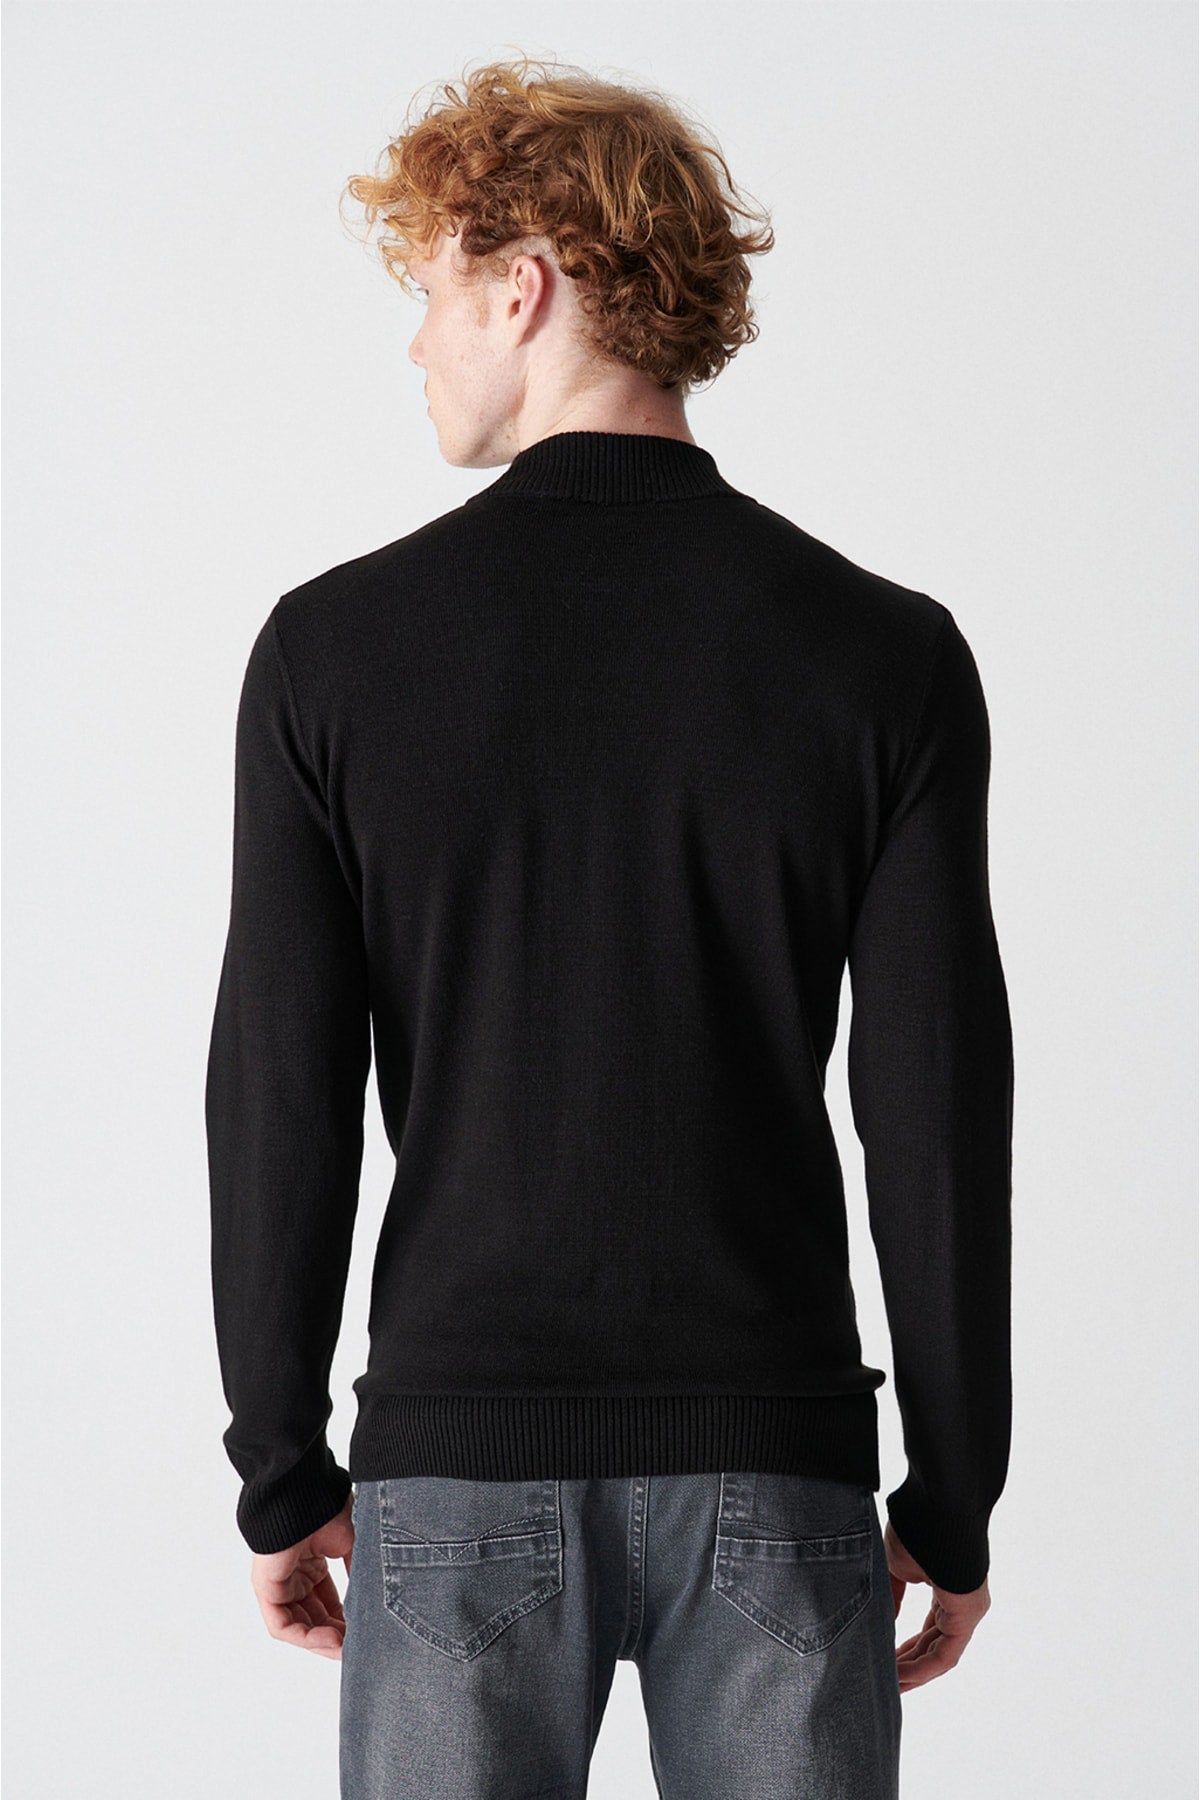 Unisex Black Half Fisherman Collar Follow -up knitwear sweater E005001